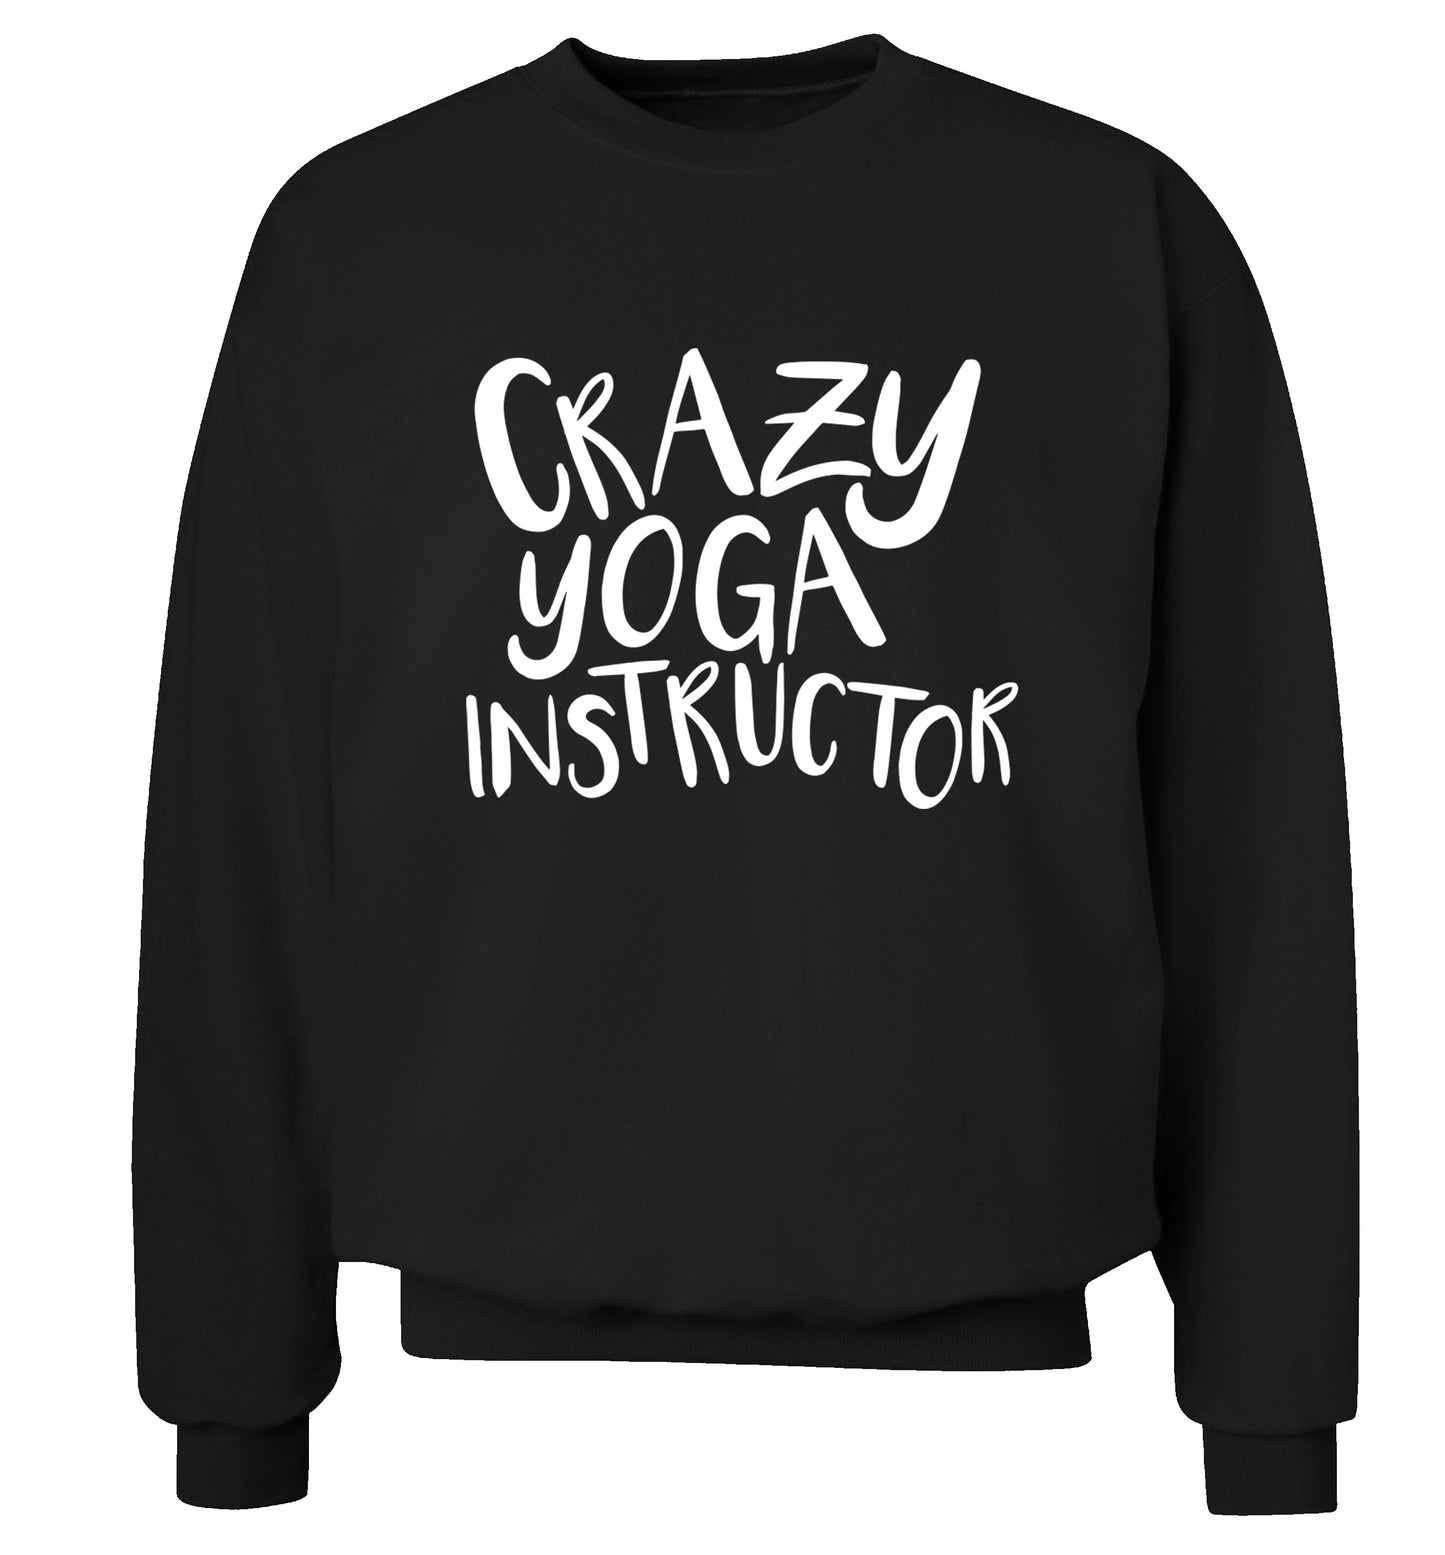 Crazy yoga instructor Adult's unisex black Sweater 2XL